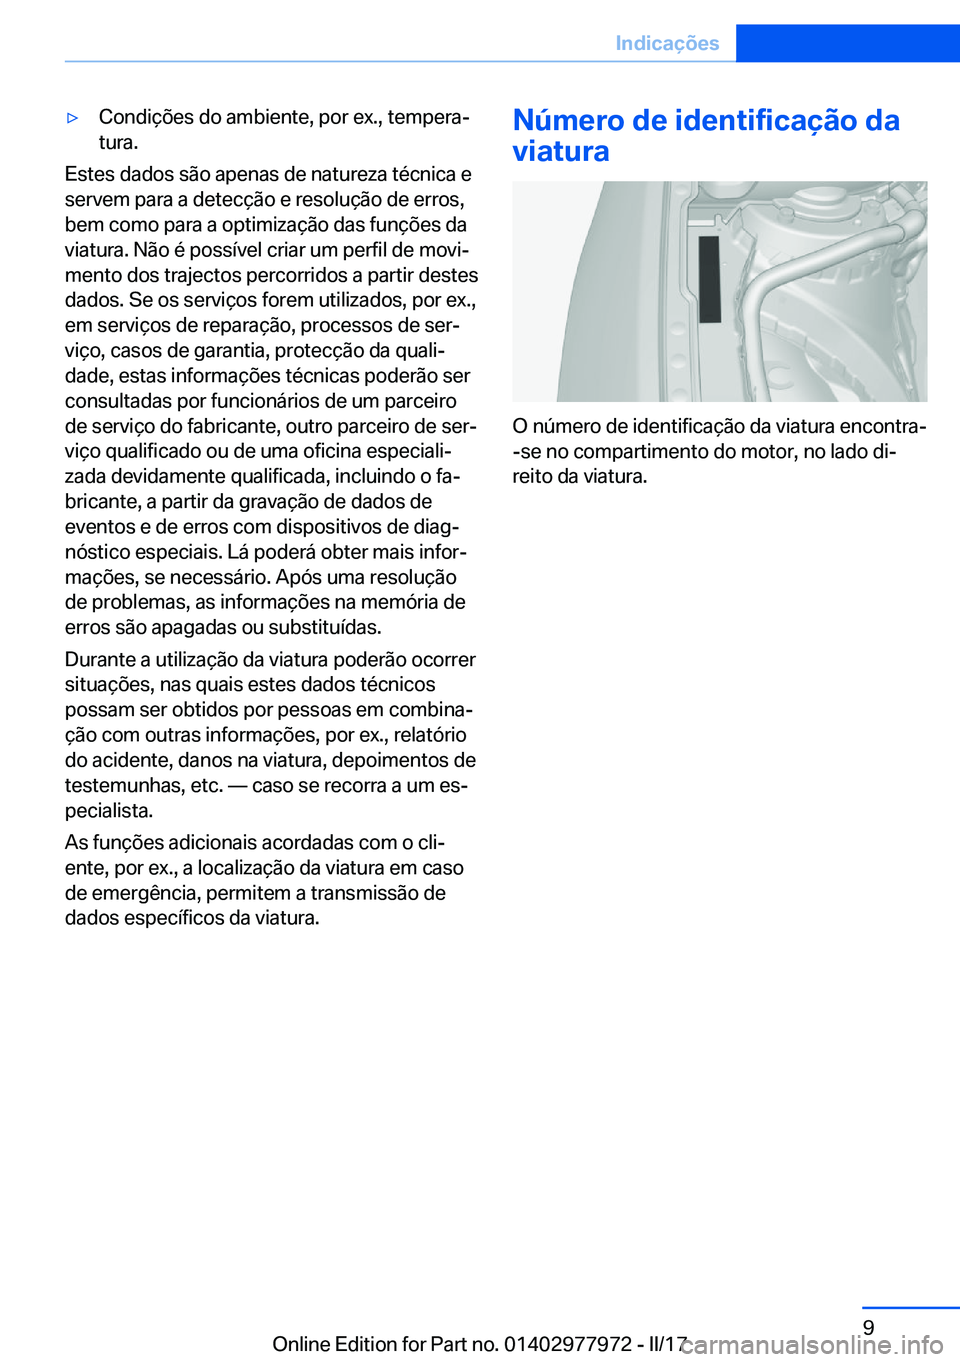 BMW 3 SERIES 2017  Manual do condutor (in Portuguese) y�C�o�n�d�i�